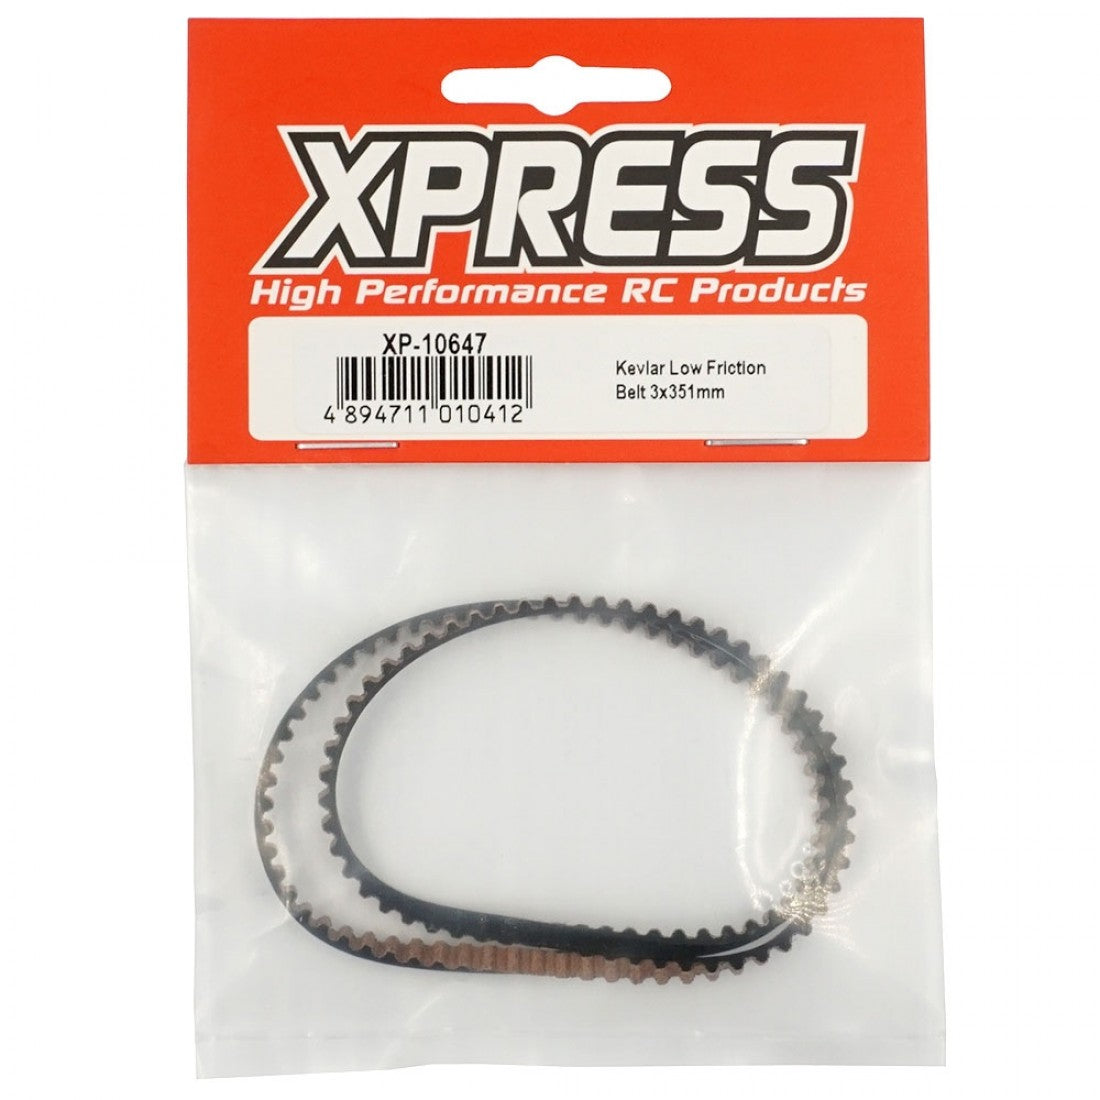 Xpress XP-10647 Kevlar Low Friction Belt 3x351mm for XQ11, XQ10